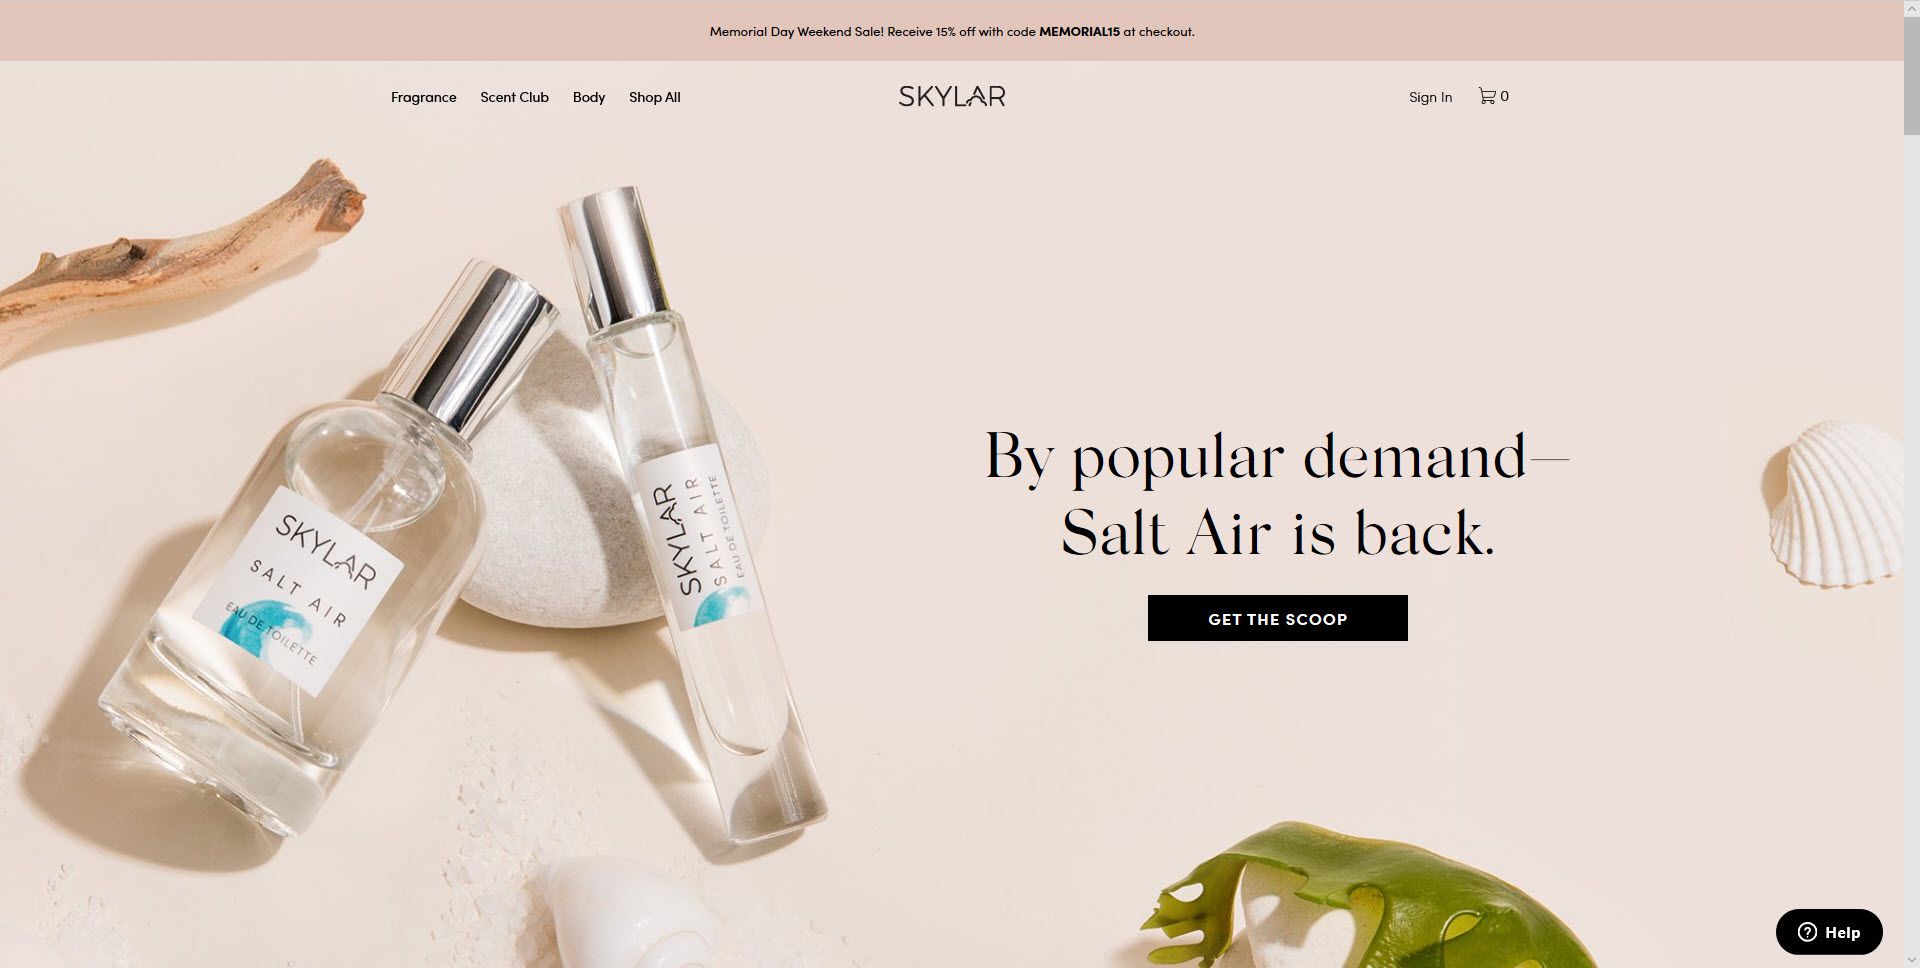 Perfume Affiliate Programs - Skylar